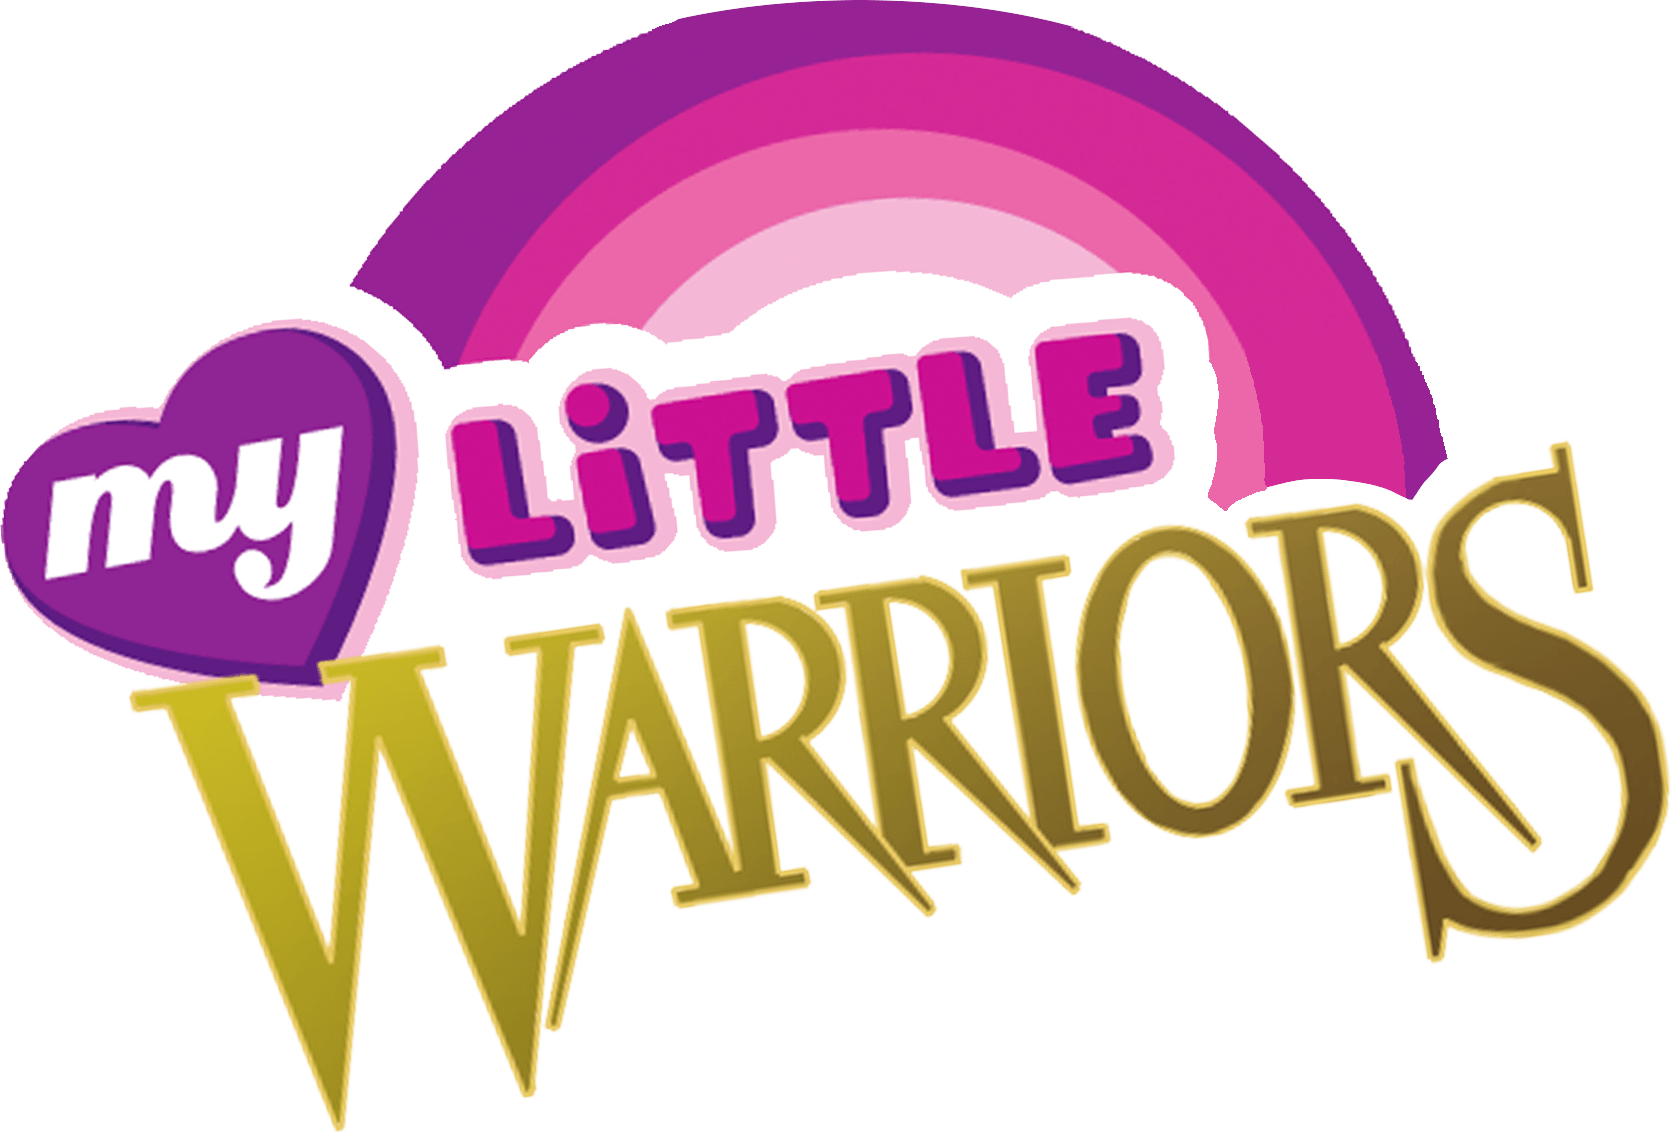 Warrior Cats Logo - Warriors Wallpaper Logo Png Image